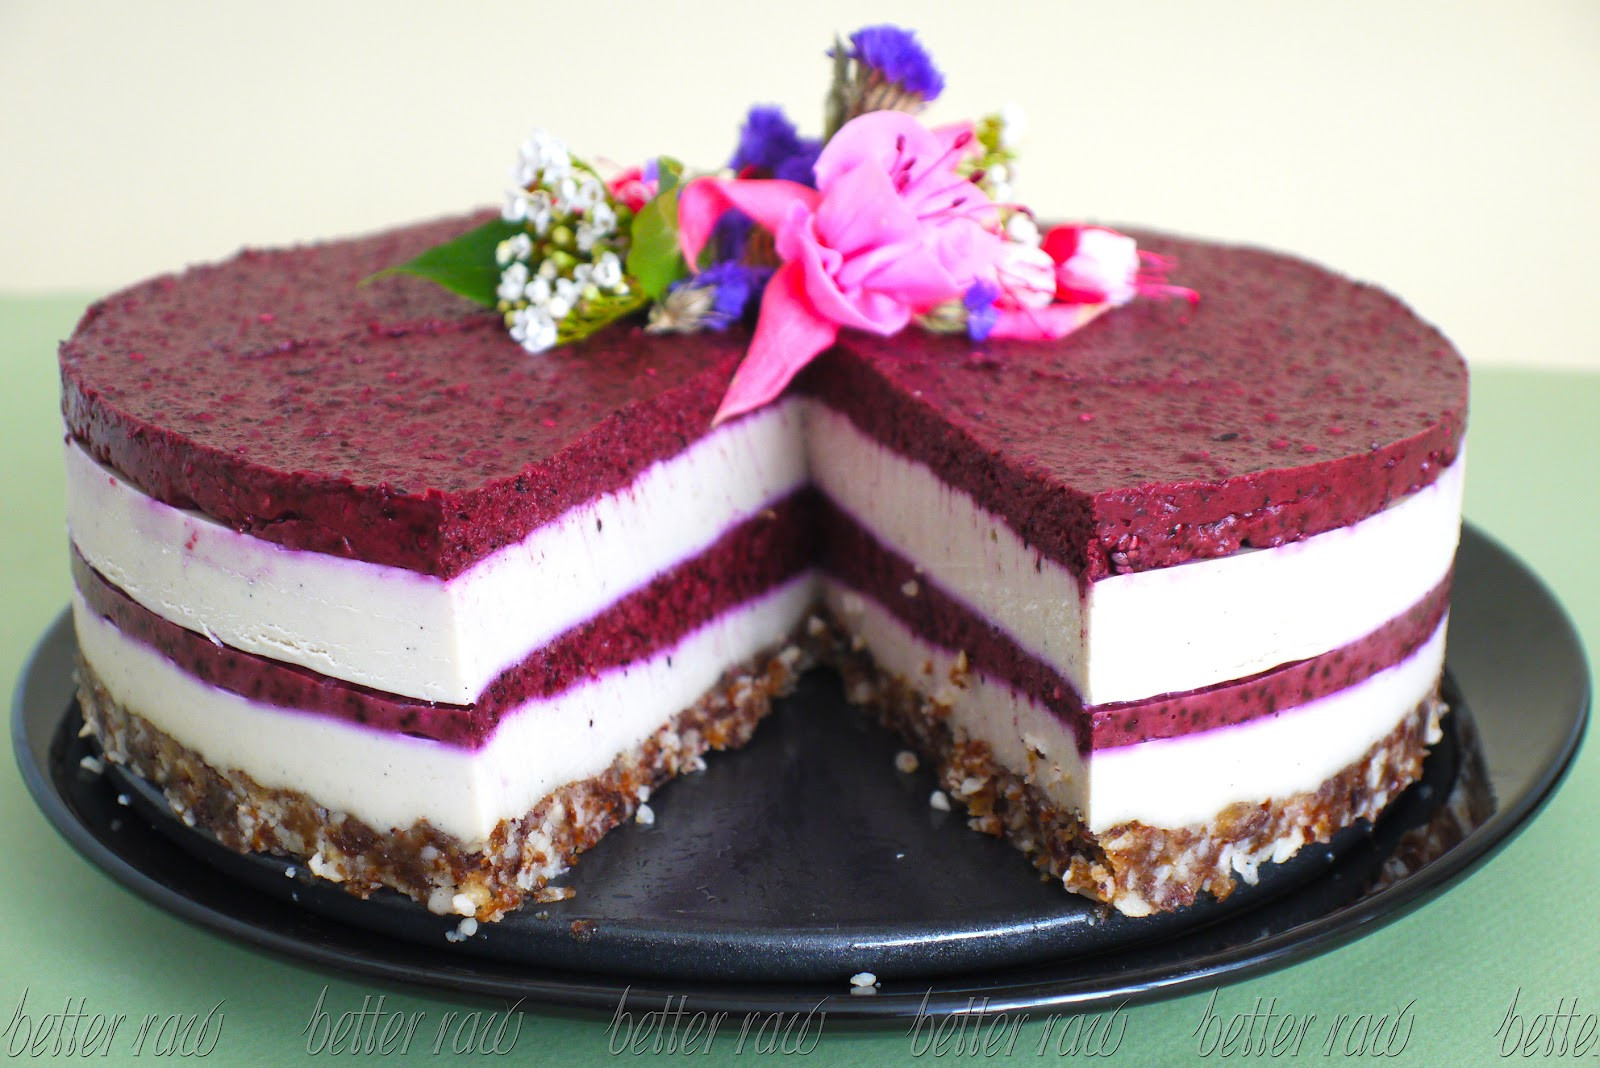 Blueberry Birthday Cake Recipes
 BLUEBERRY AND CREAM LAYER BIRTHDAY CAKE Better Raw